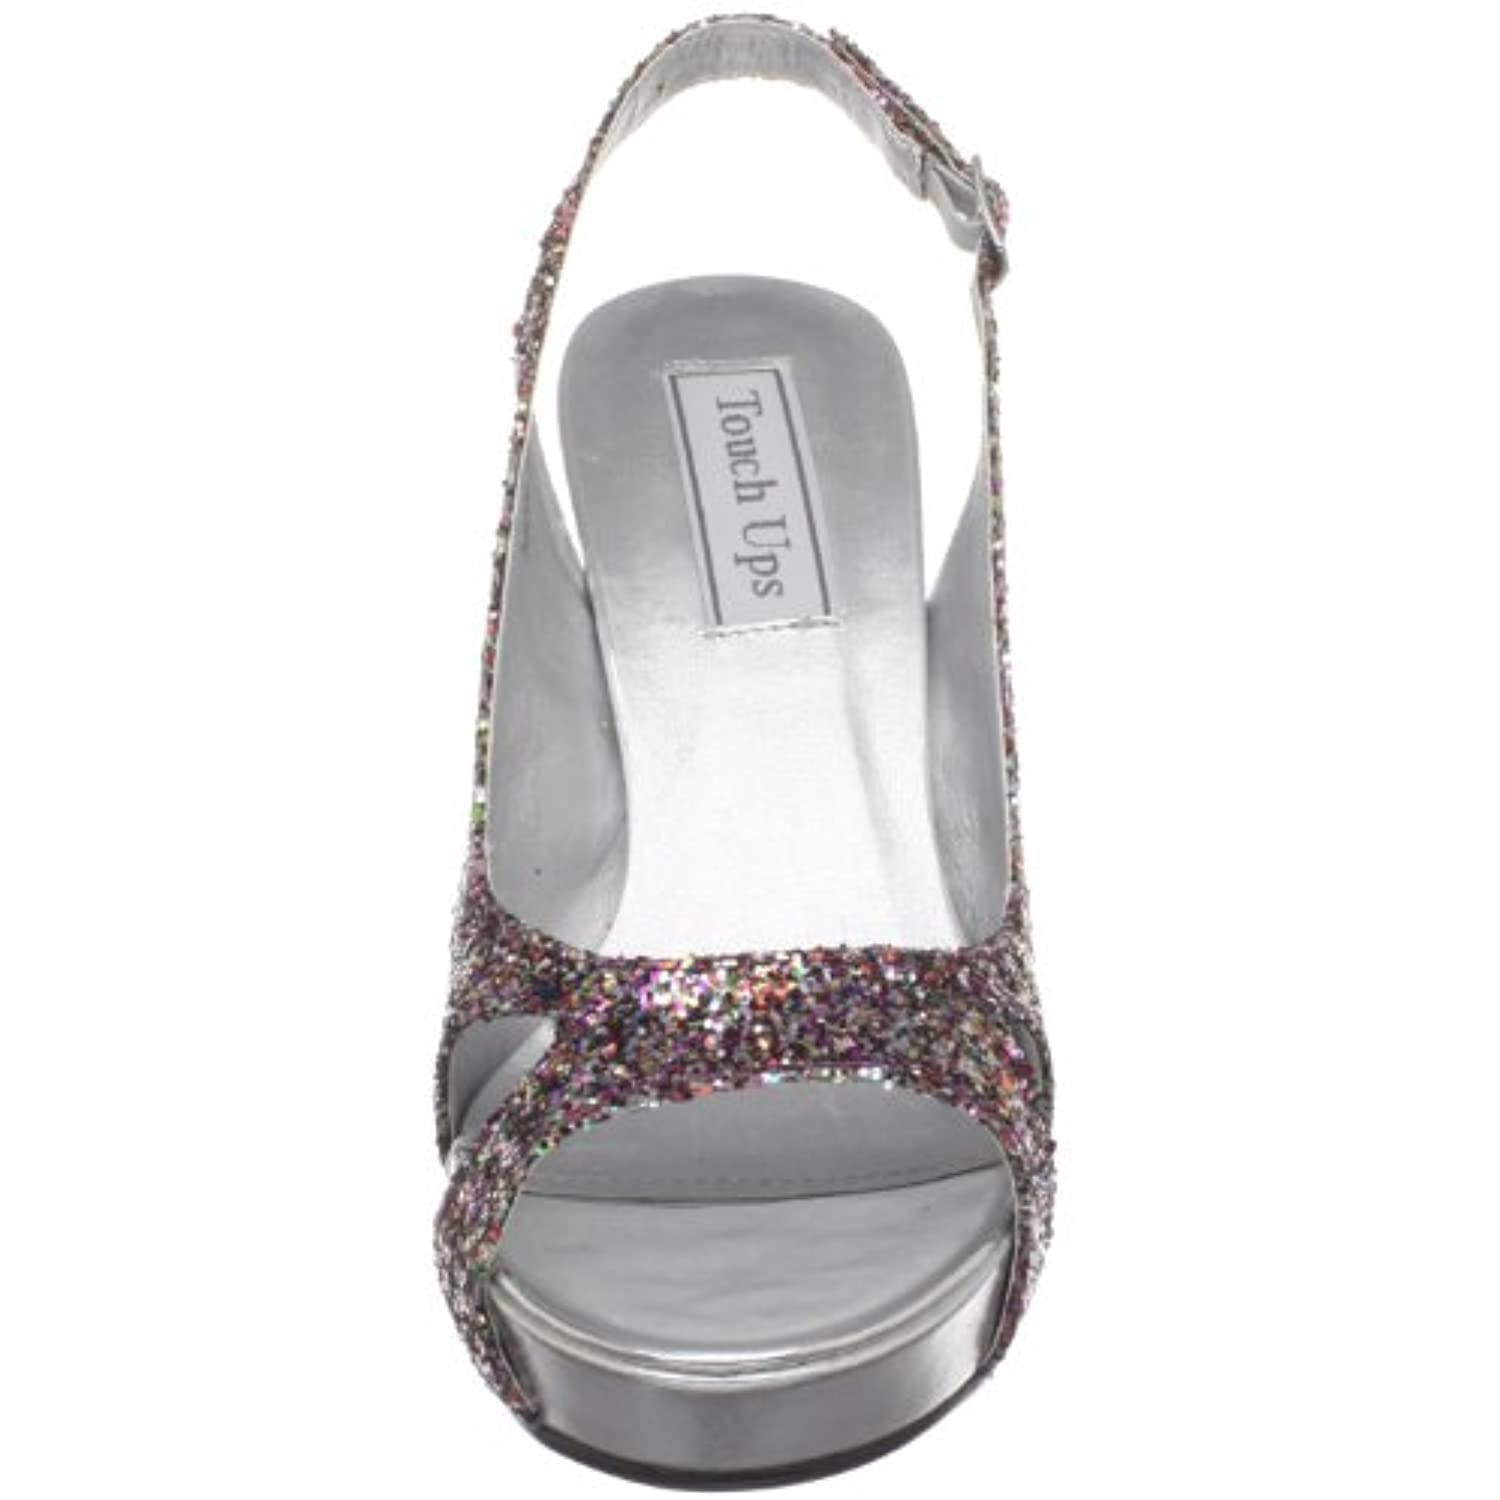 Touch Ups Women's Cinnamon Platform Sandal,Multi Glitter,5 M US